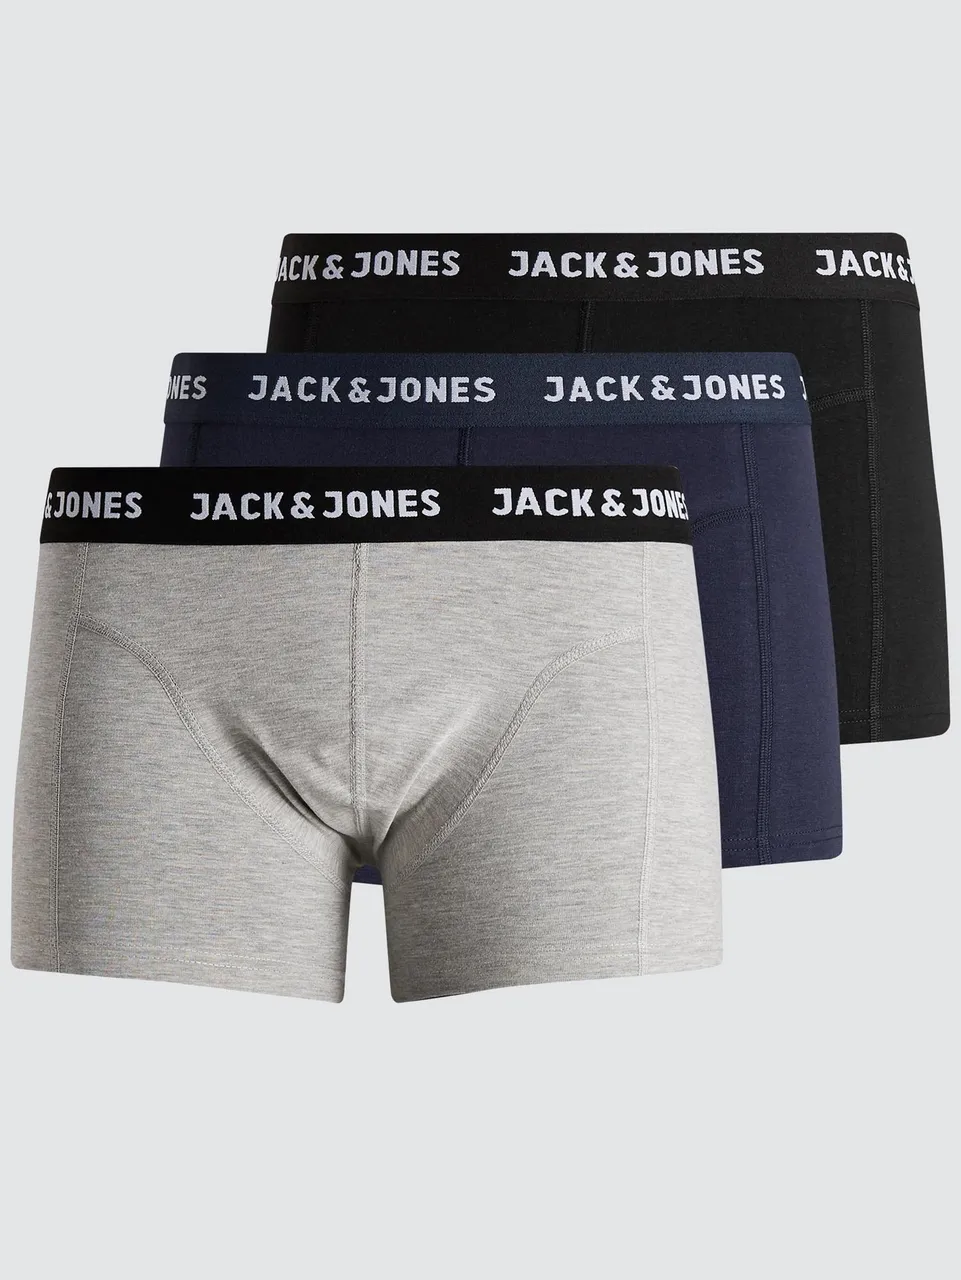 Jack & Jones Black / Bluenight 3-Pack Plain Trunks